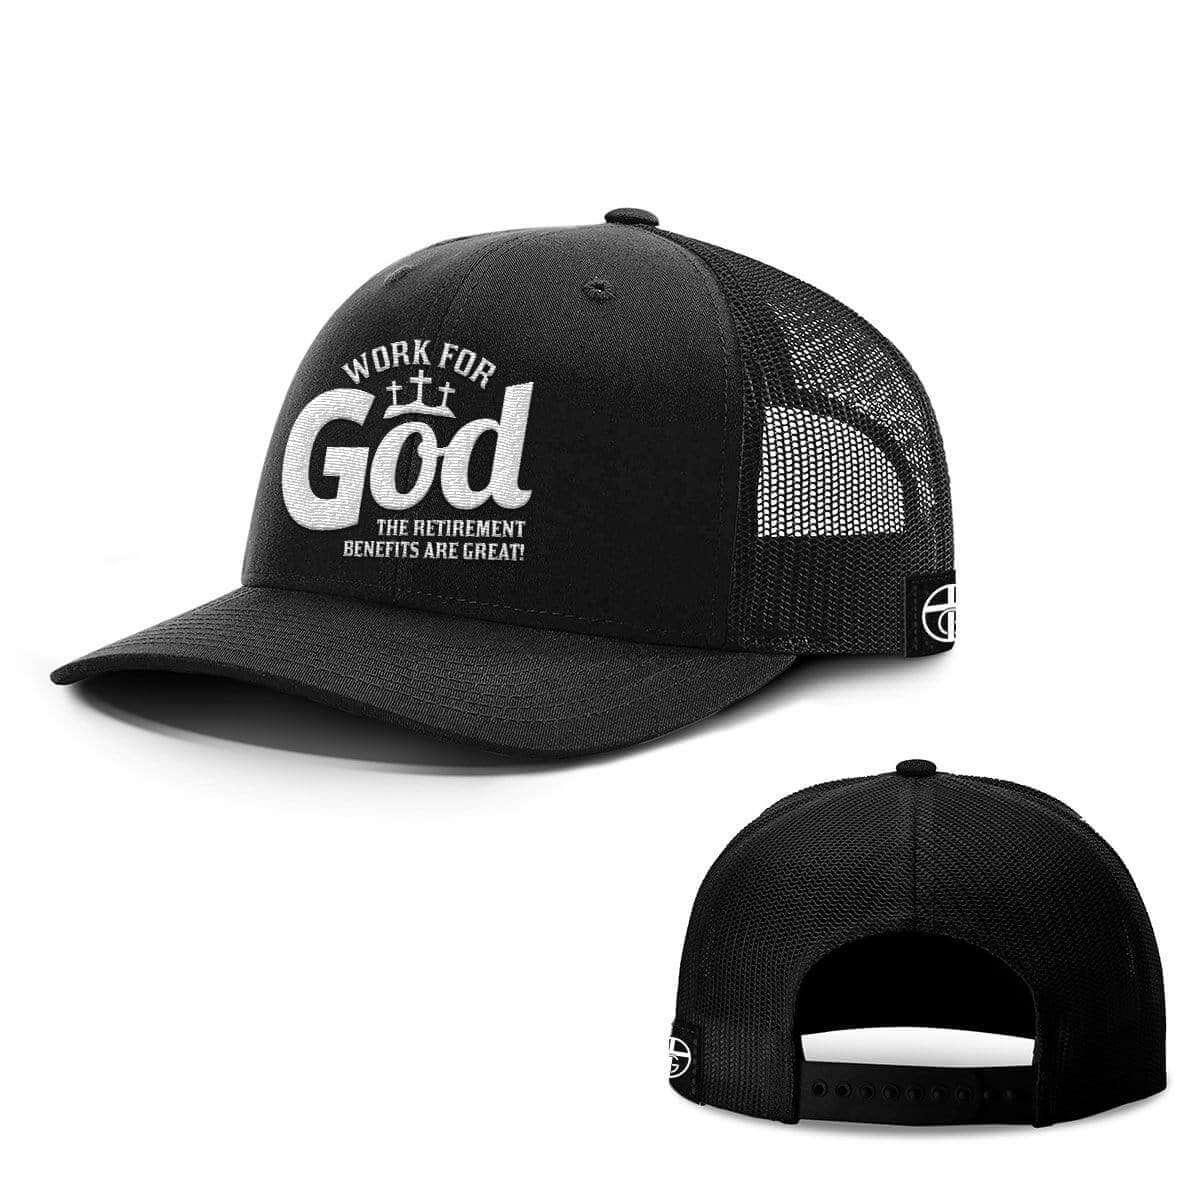 Work For God Hats